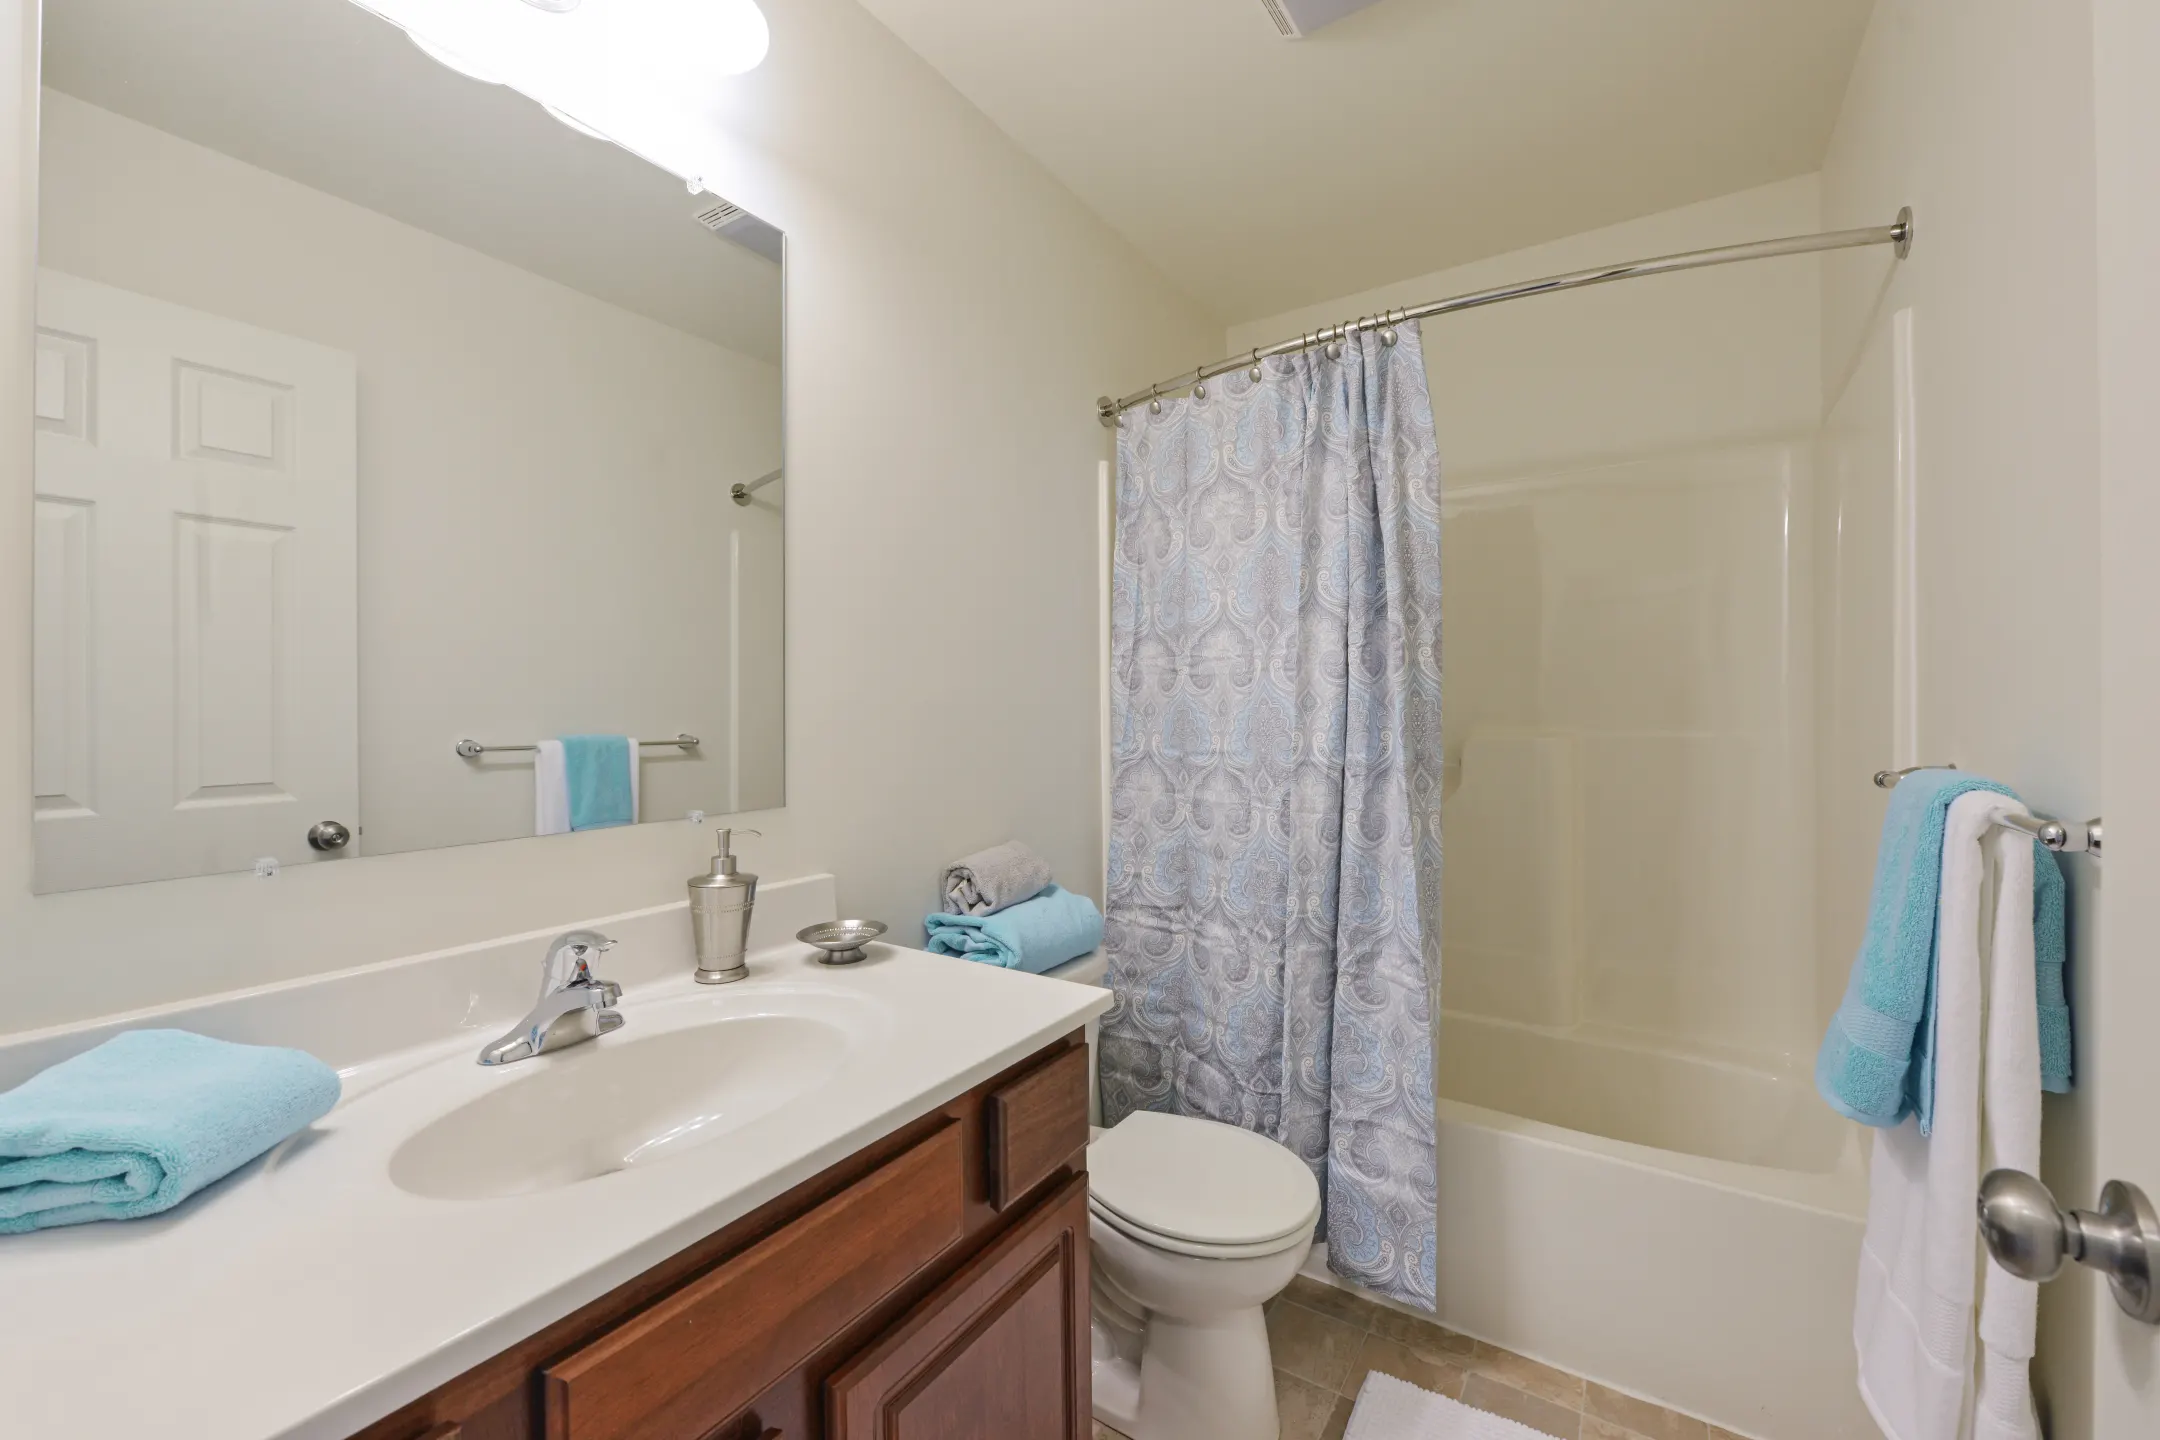 Bathroom - Townhomes at Paxton Creek - Harrisburg, PA